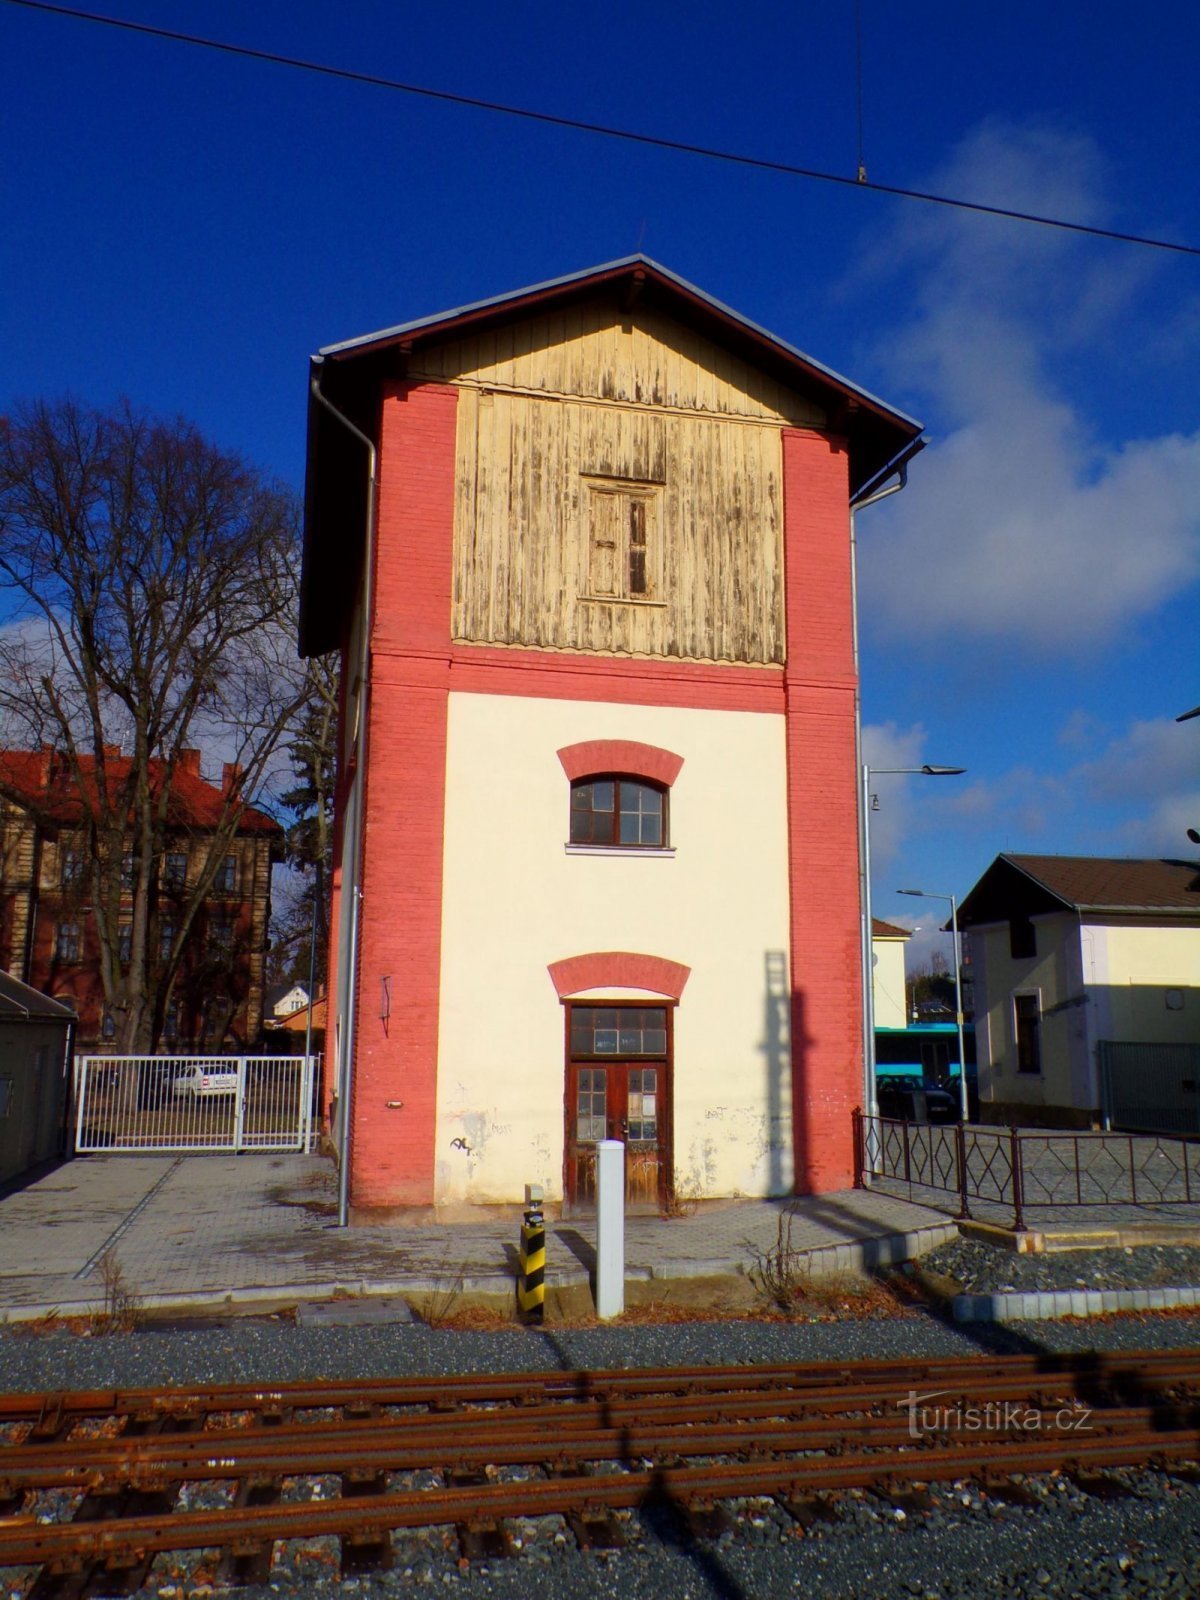 Railway station (Jaroměř, 12.2.2022/XNUMX/XNUMX)